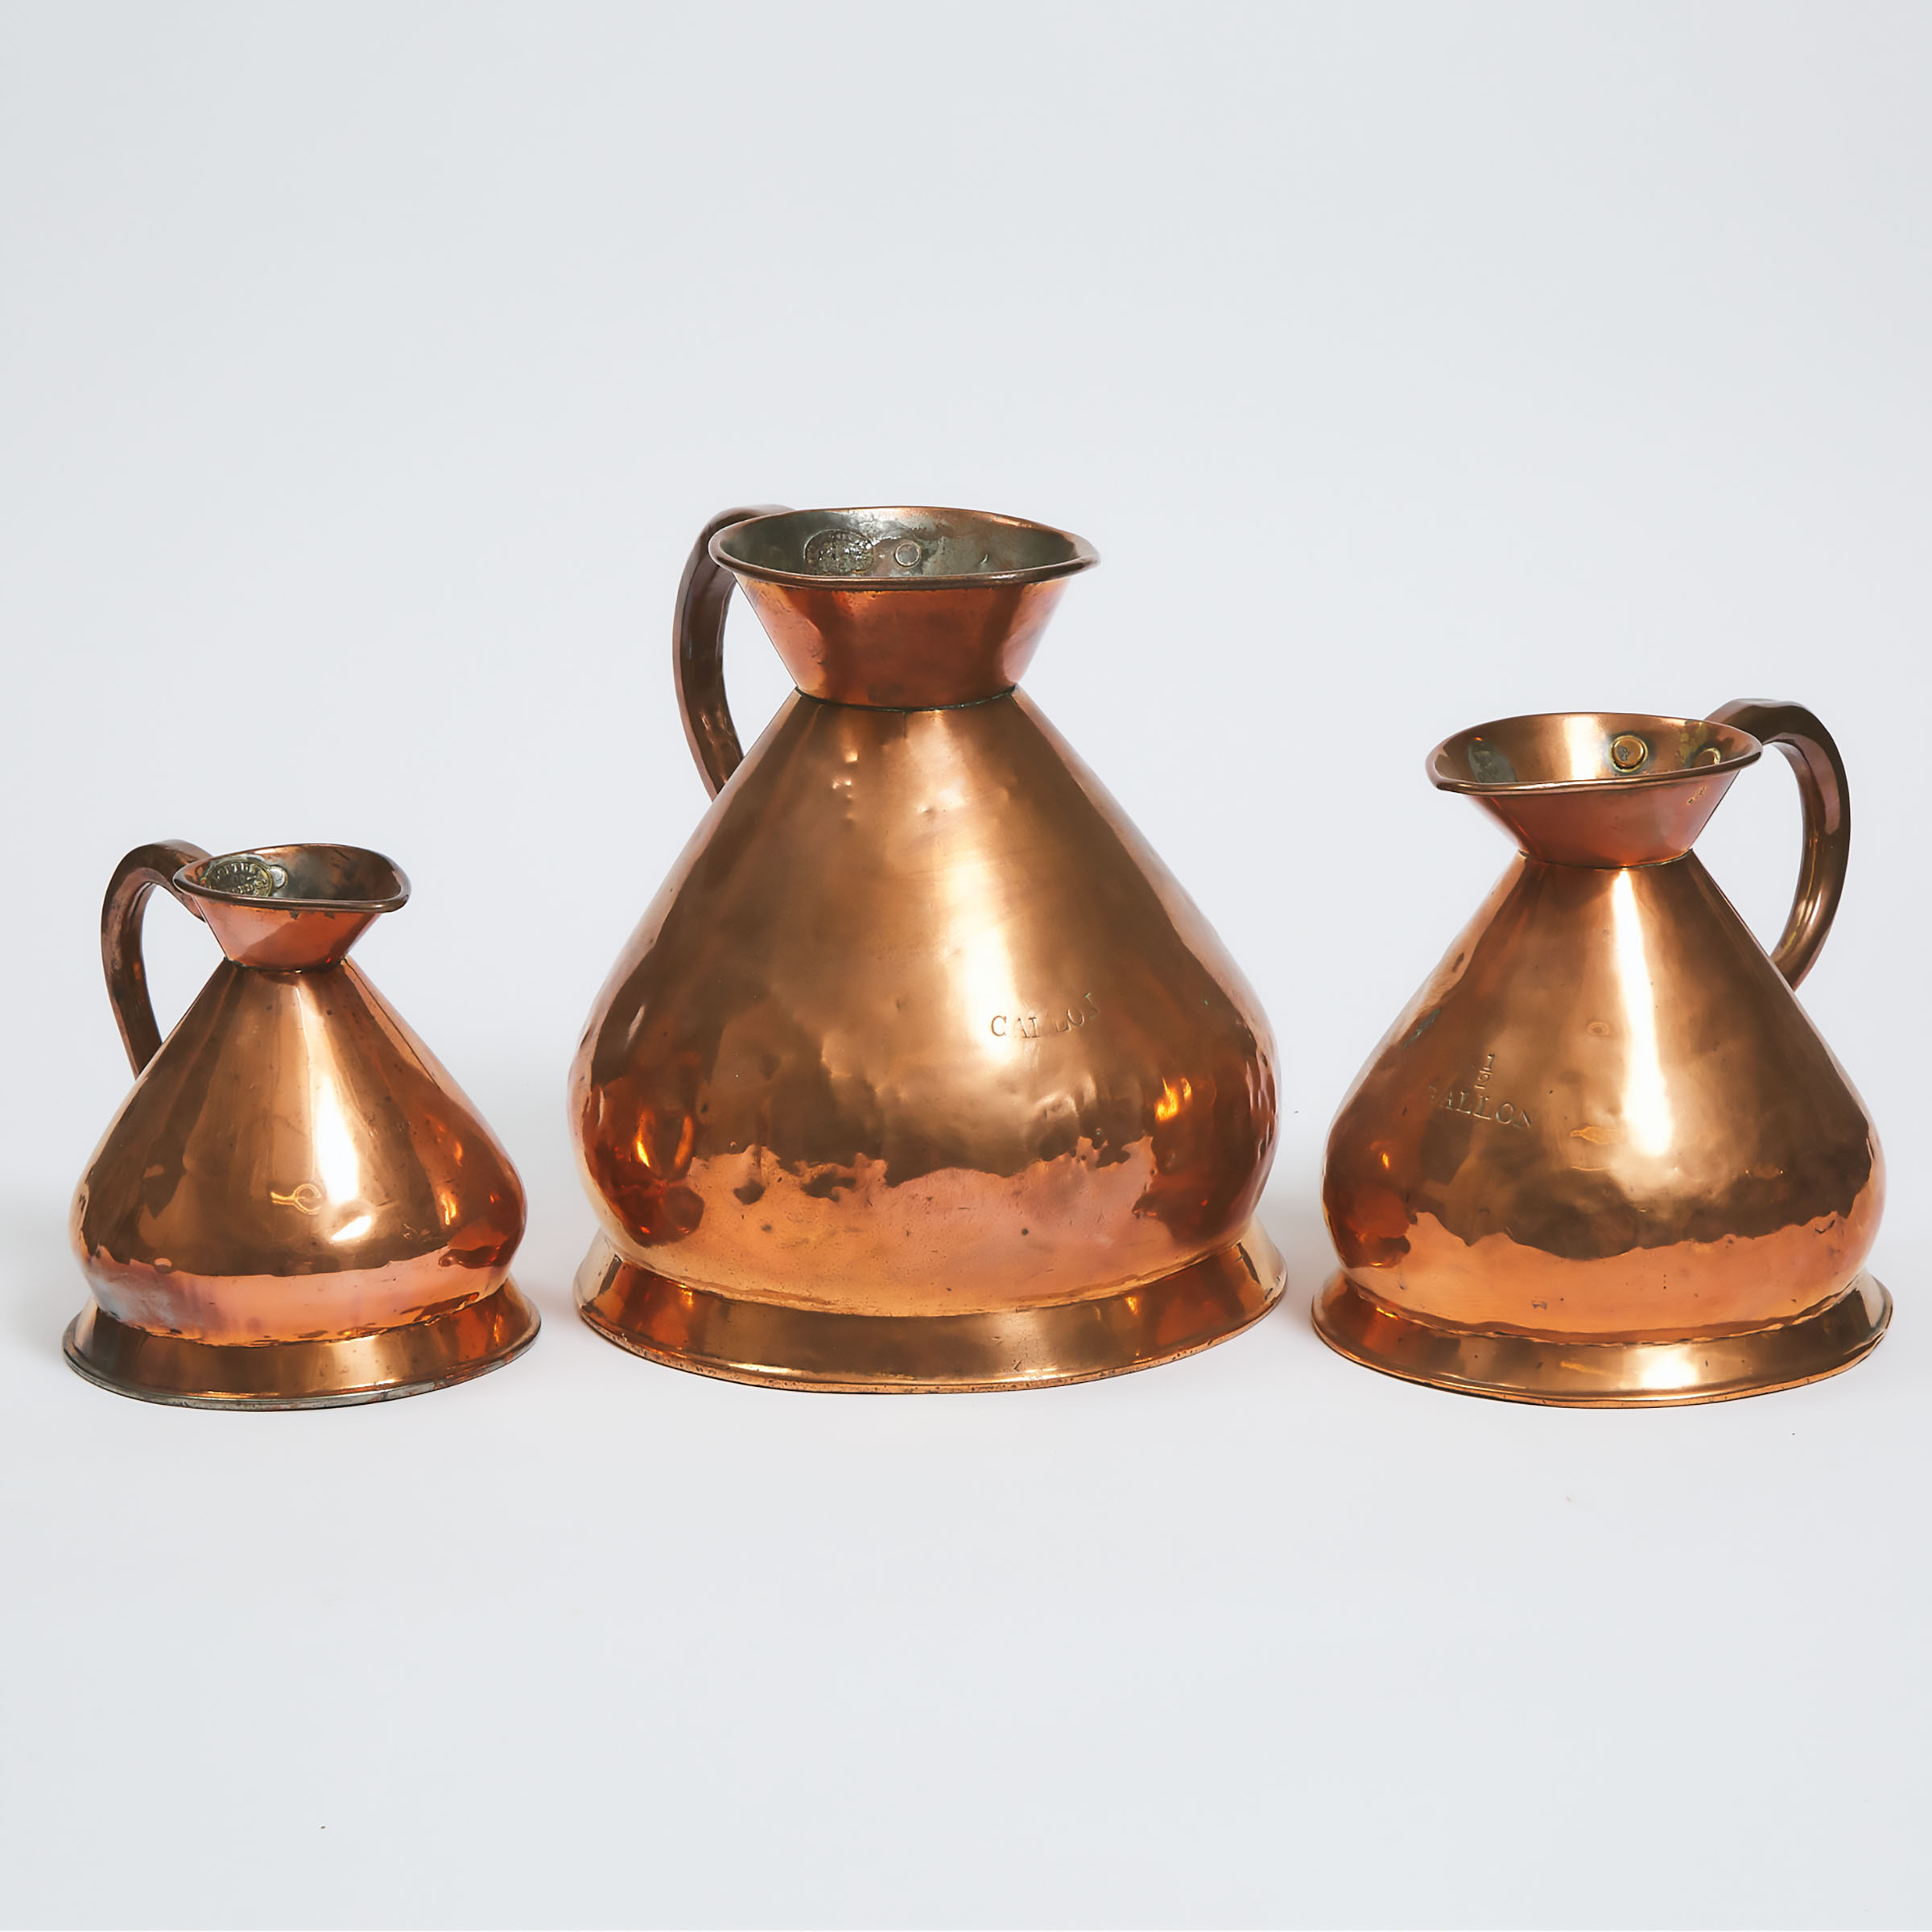 Three Graduated Copper Haystack Measures, 19th century